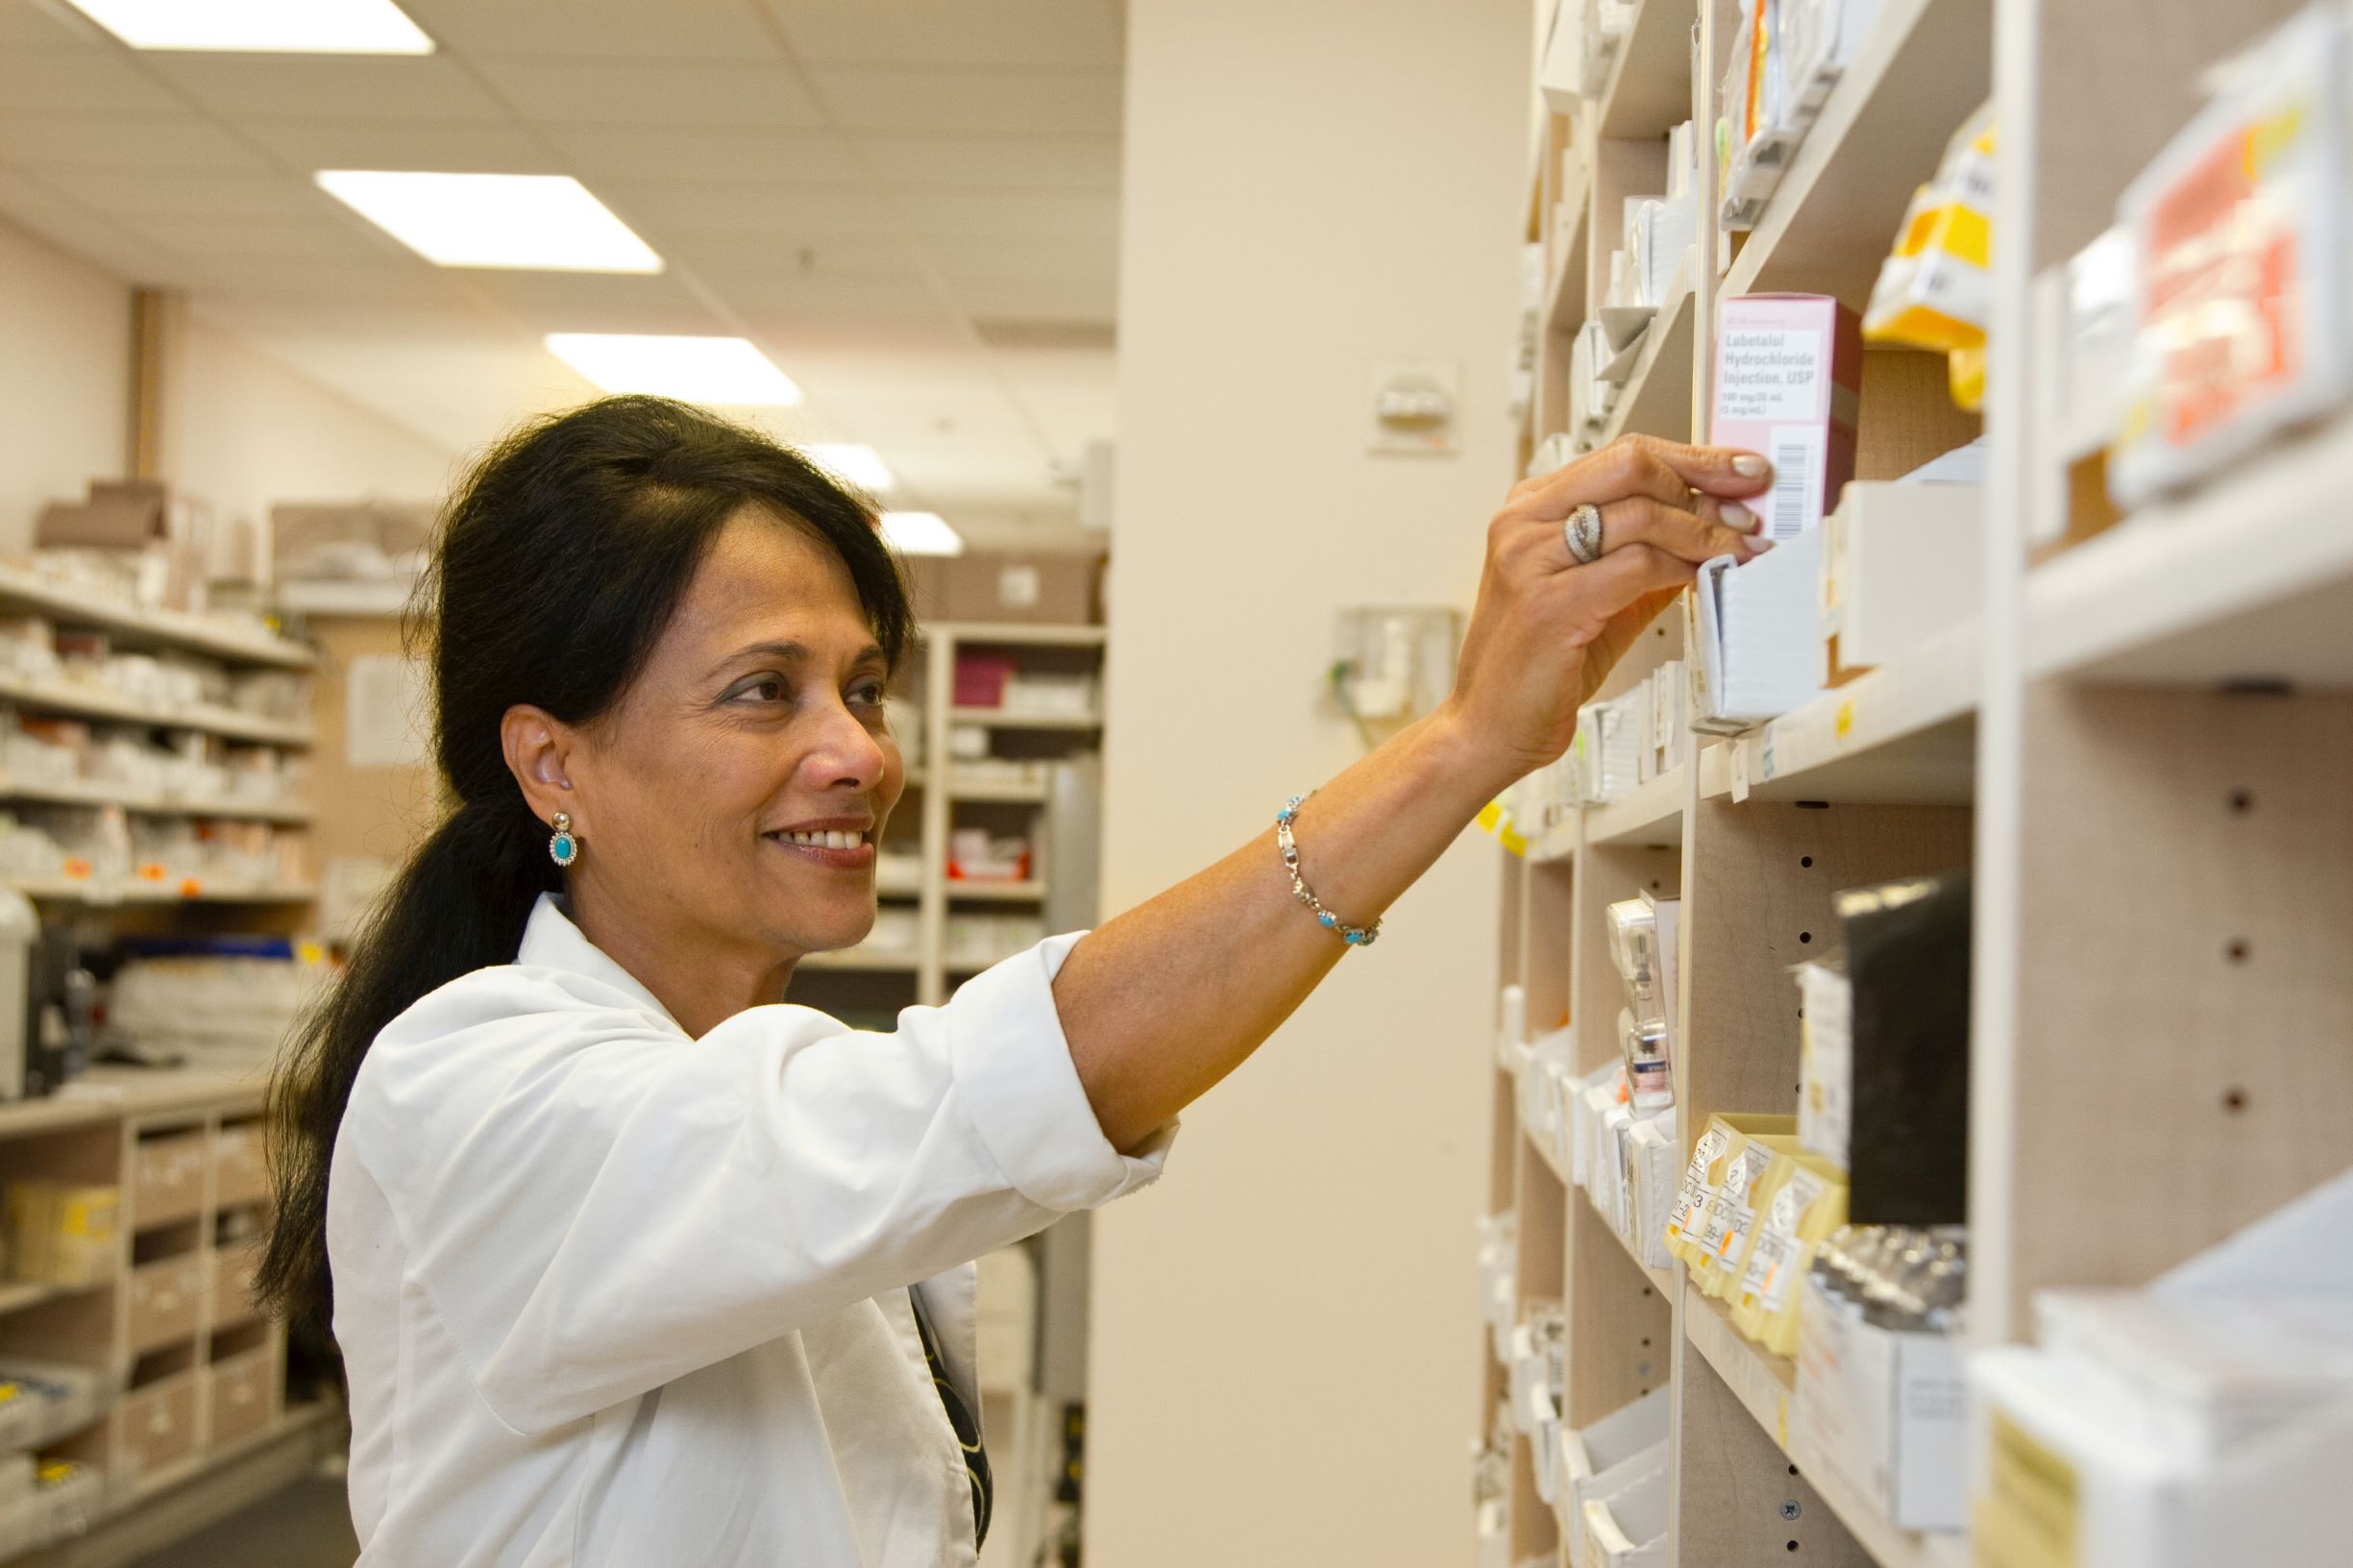 Pharmacist smiling and reaching for something on pharmacy shelf.